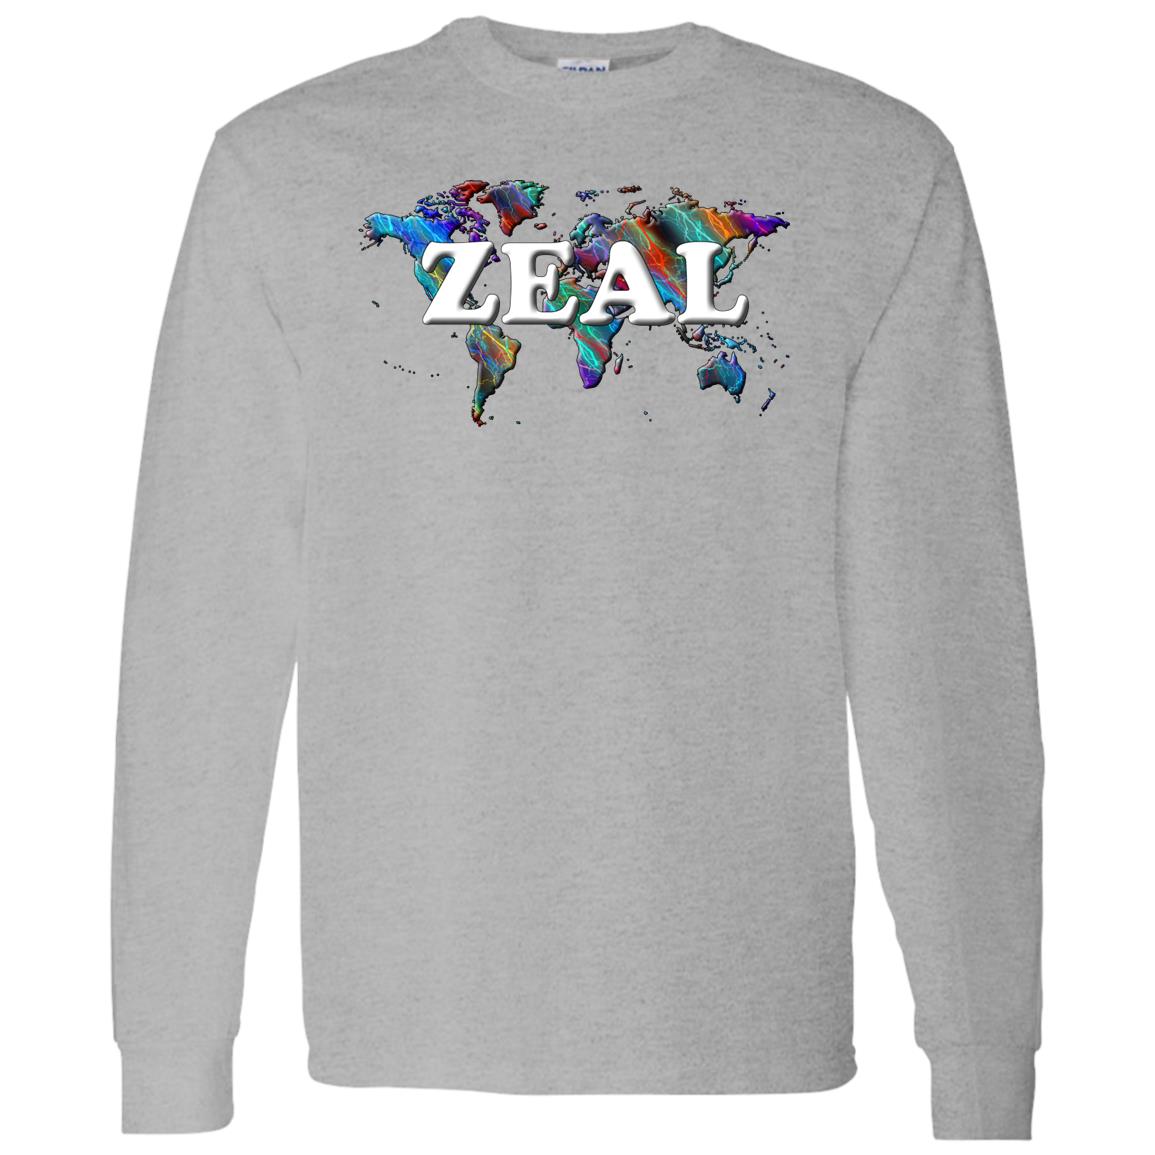 Zeal Long Sleeve T-Shirt